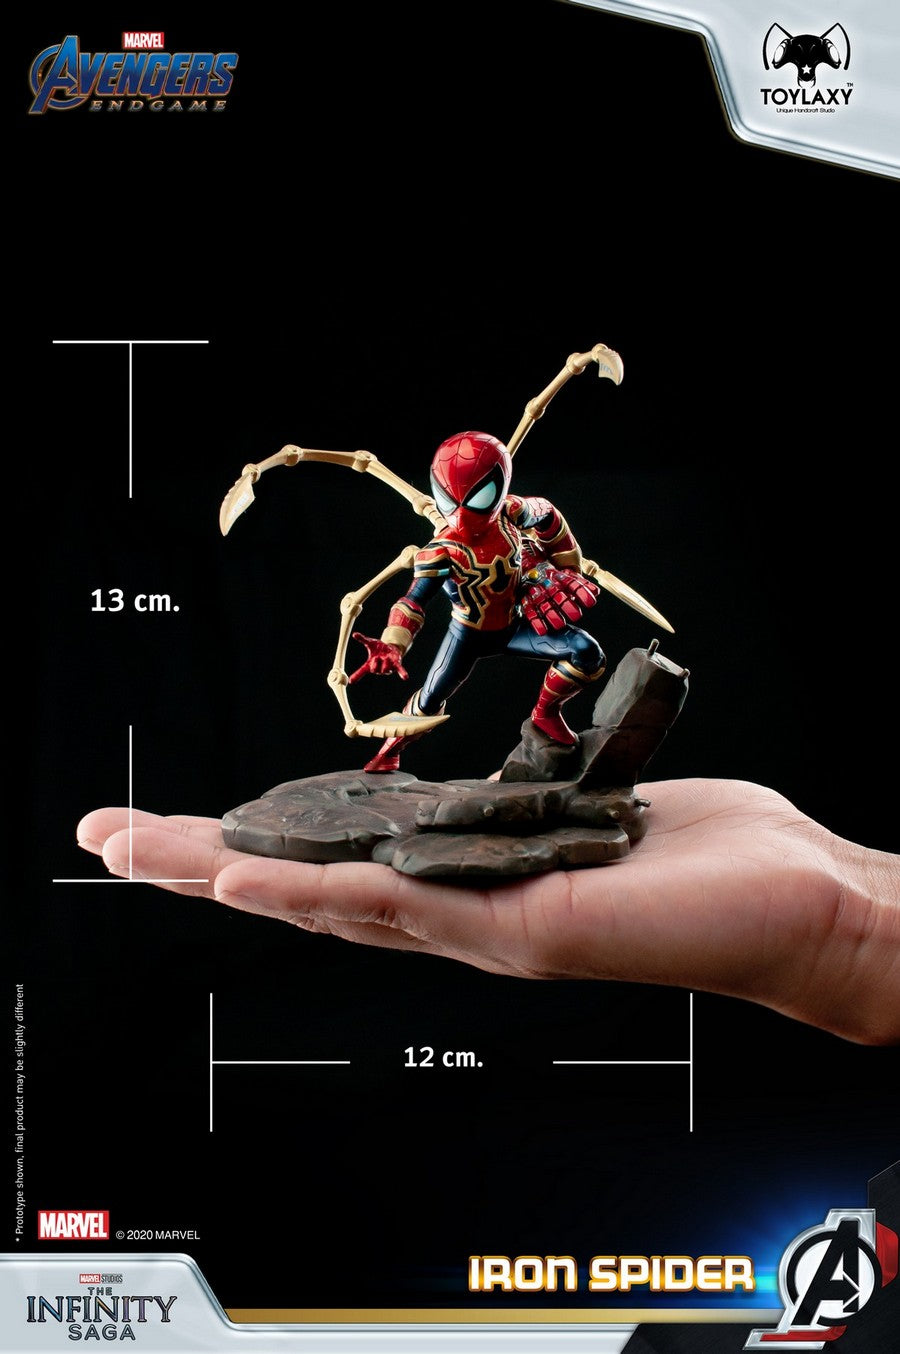 Avengers 4: Endgame - Iron Spider Iron Spider | Marvel's Avengers: Endgame Collectible Figure -size